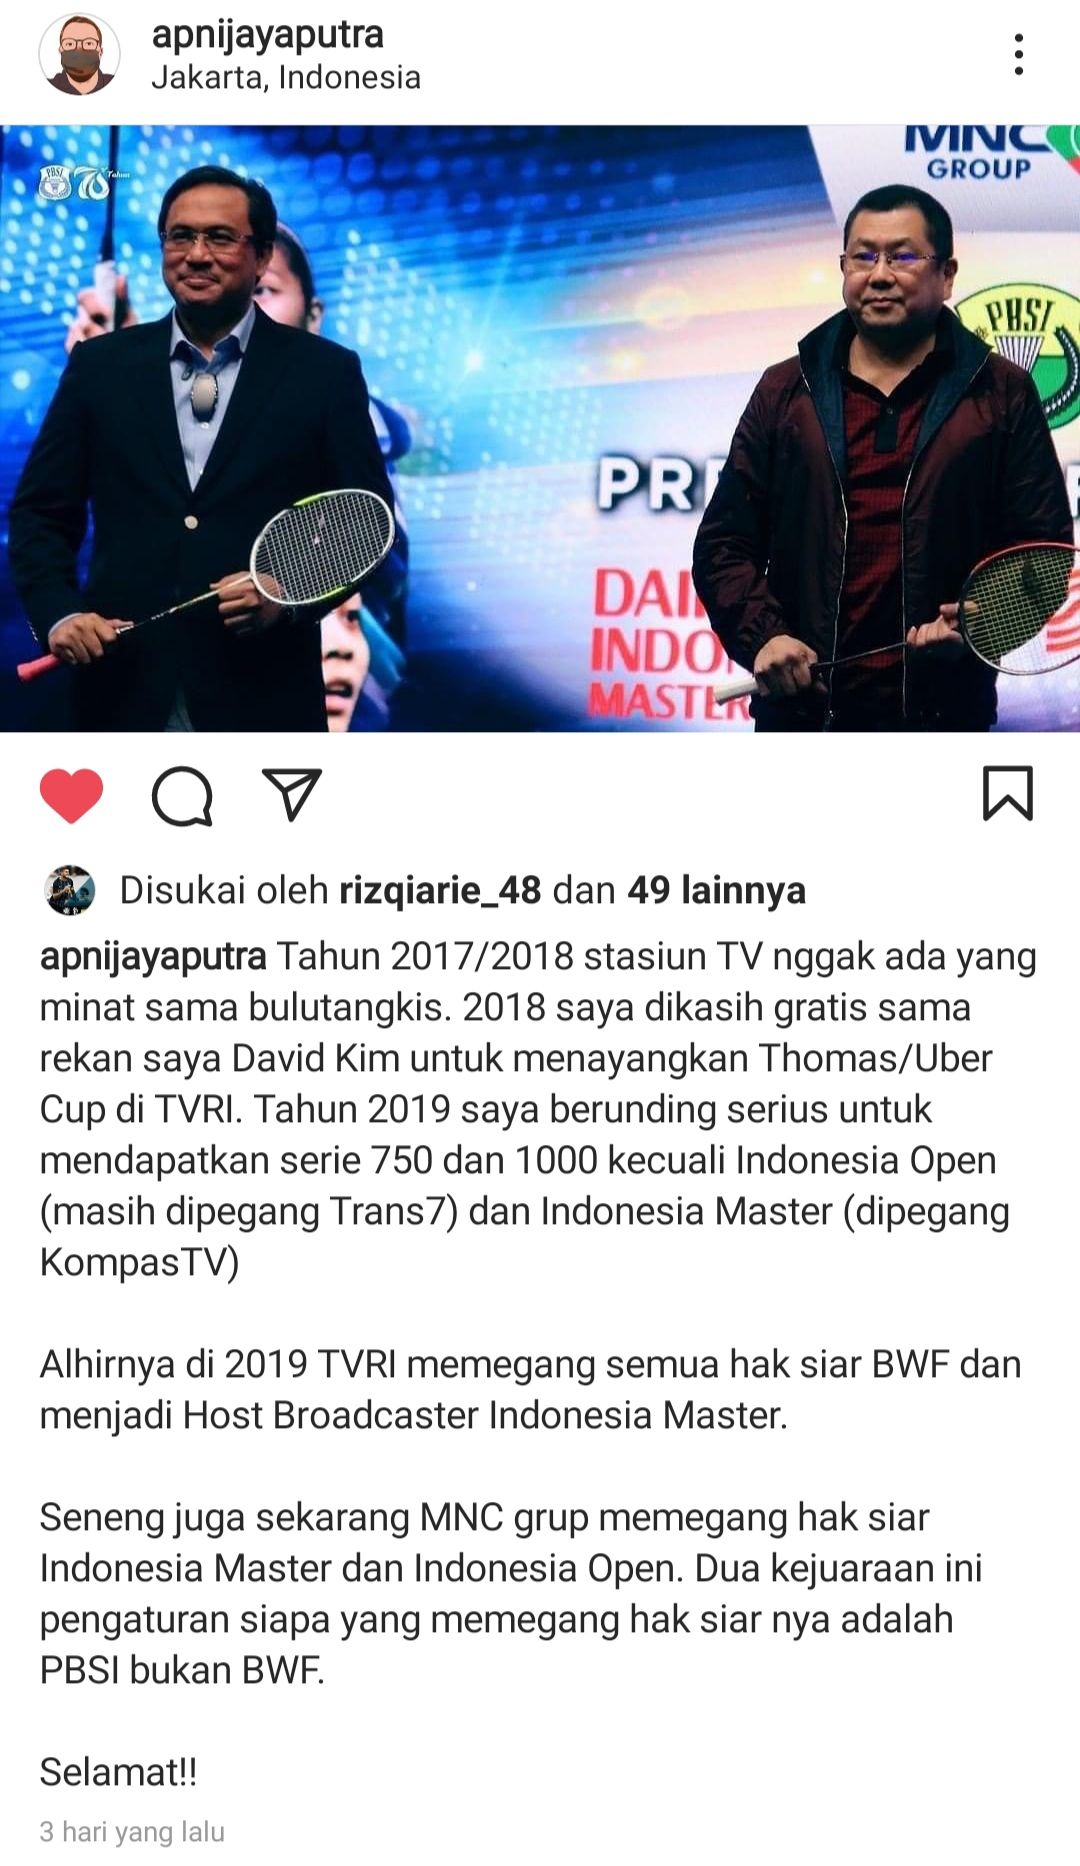 Apni Jaya Putra Ucapkan Selamat untuk MNC Group yang Akan Menyiarkan Indonesia Masters dan Indonesia Open 2021